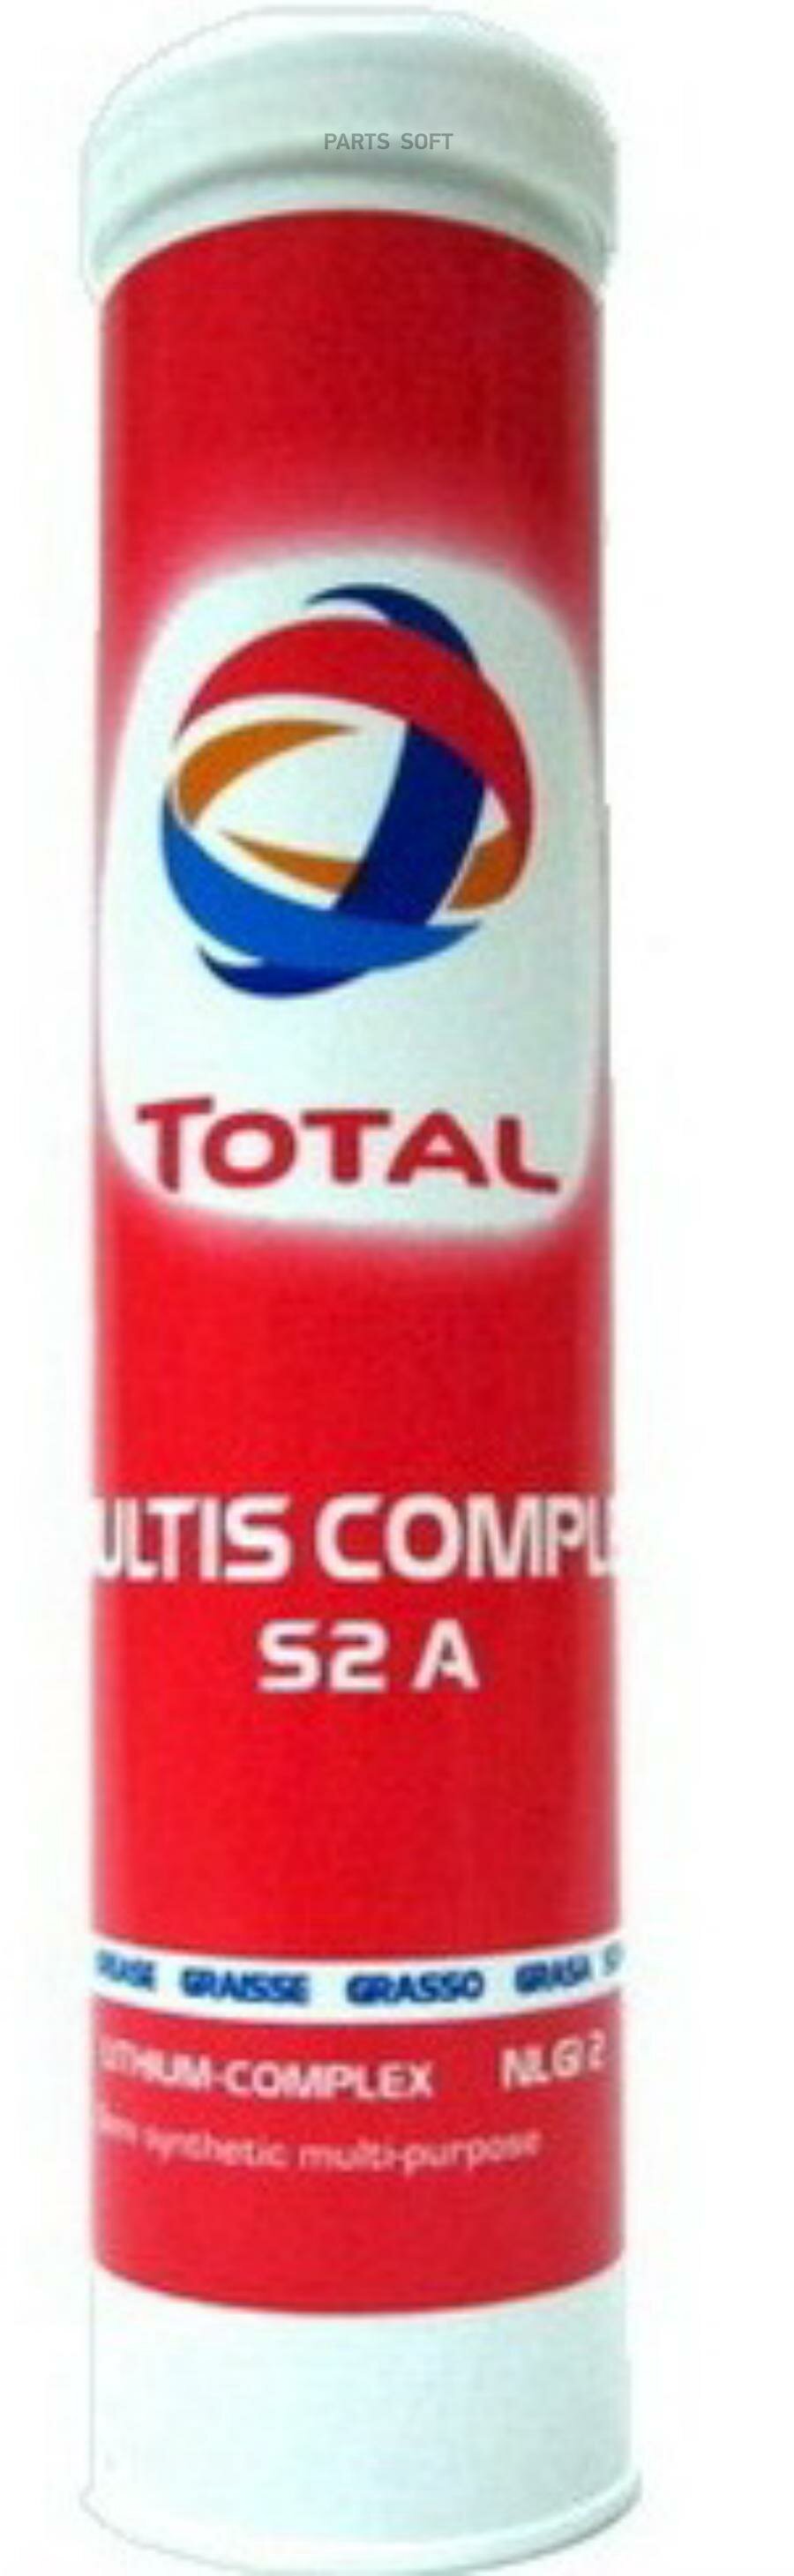 TOTALENERGIES 160833 TOTAL MULTIS COMPLEX S2А (0,4 KG)_!литиевая смазка\(синяя) ISO 6743-9: L-XBEHB2, DIN 51502: KP2P-25